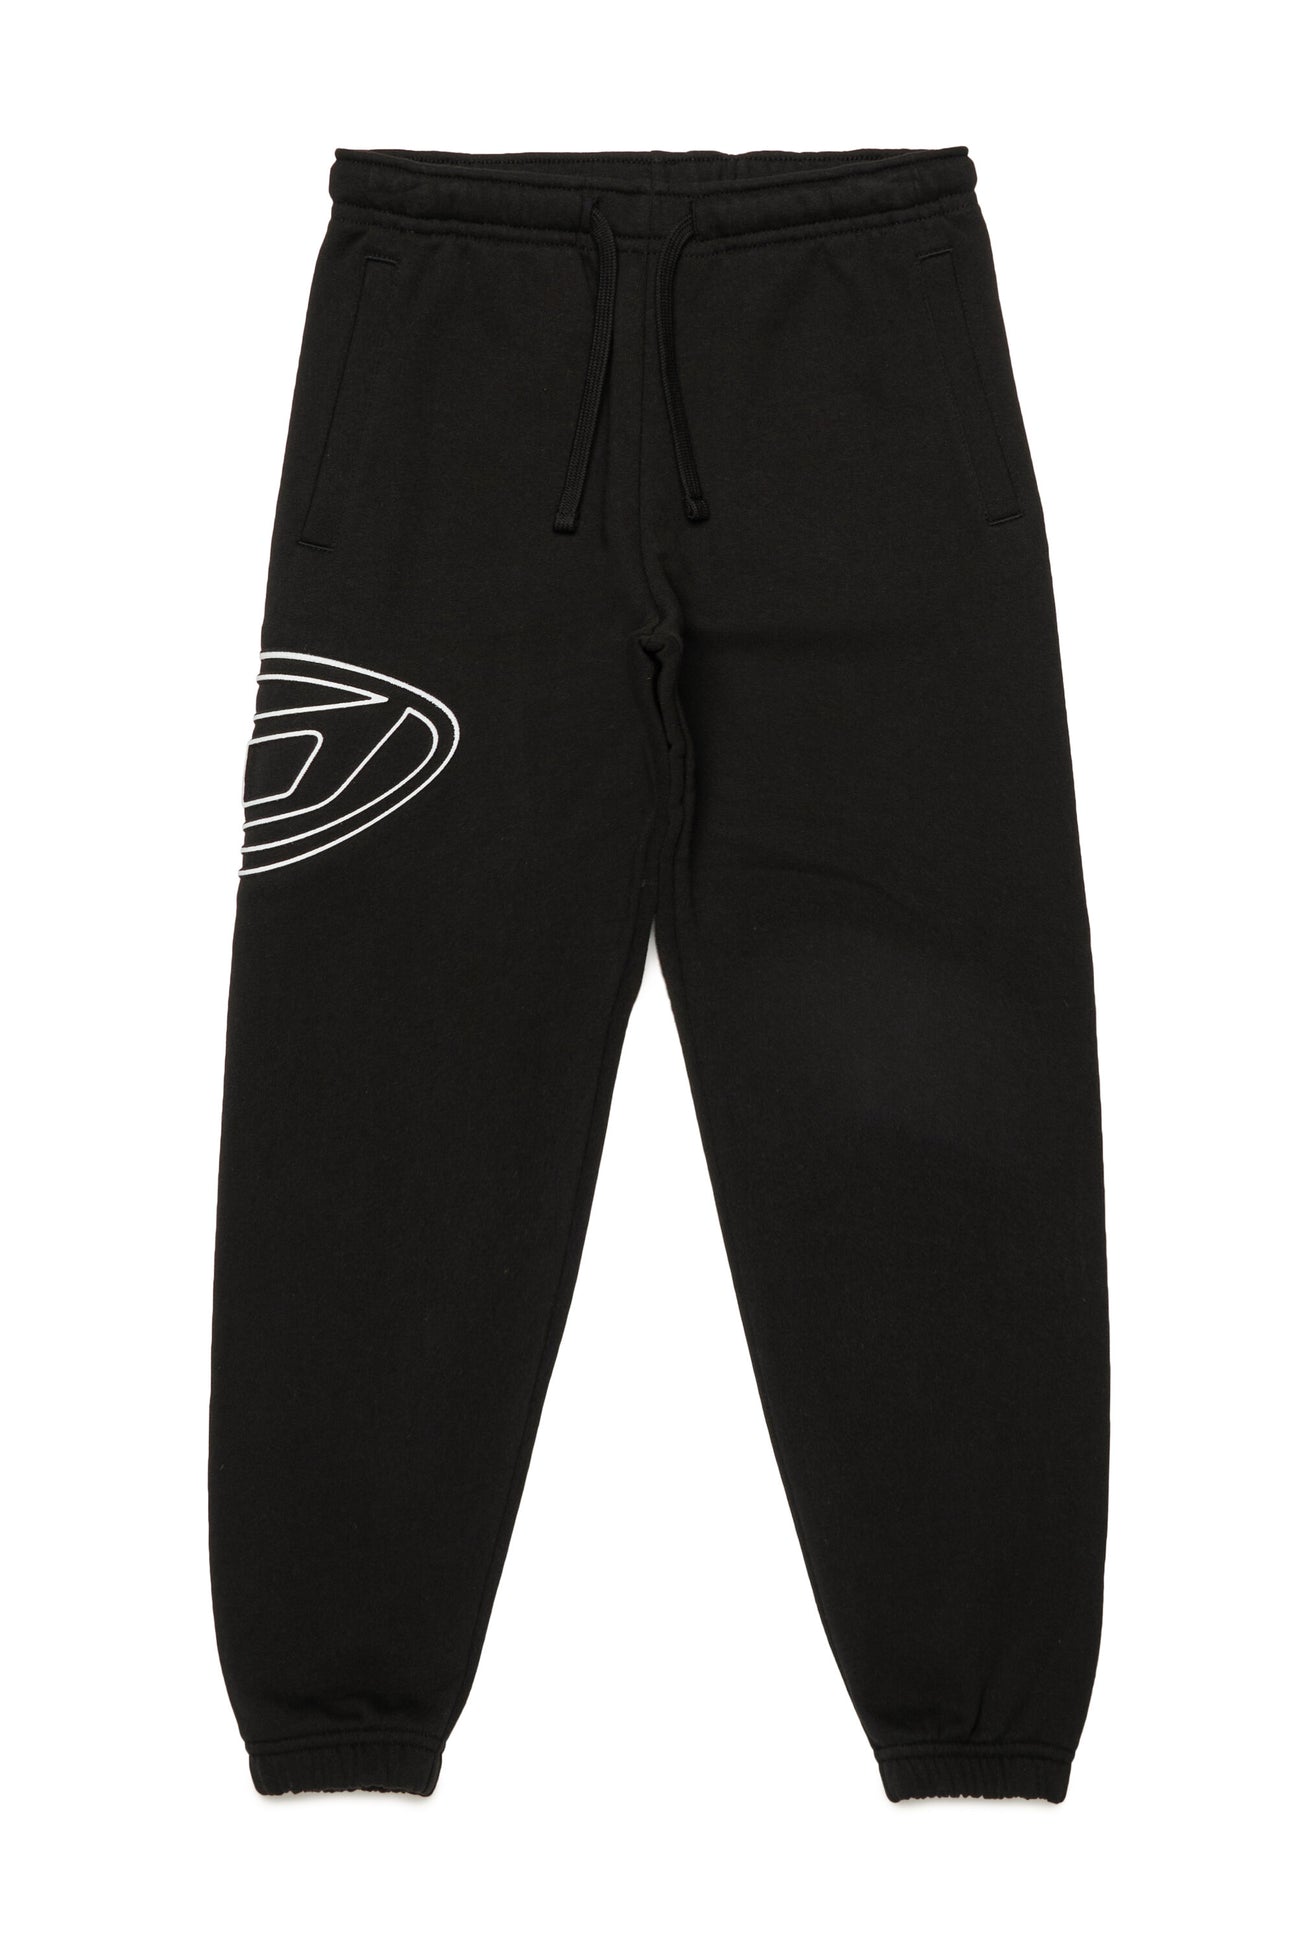 Fleece jogger pants with Oval D logo 